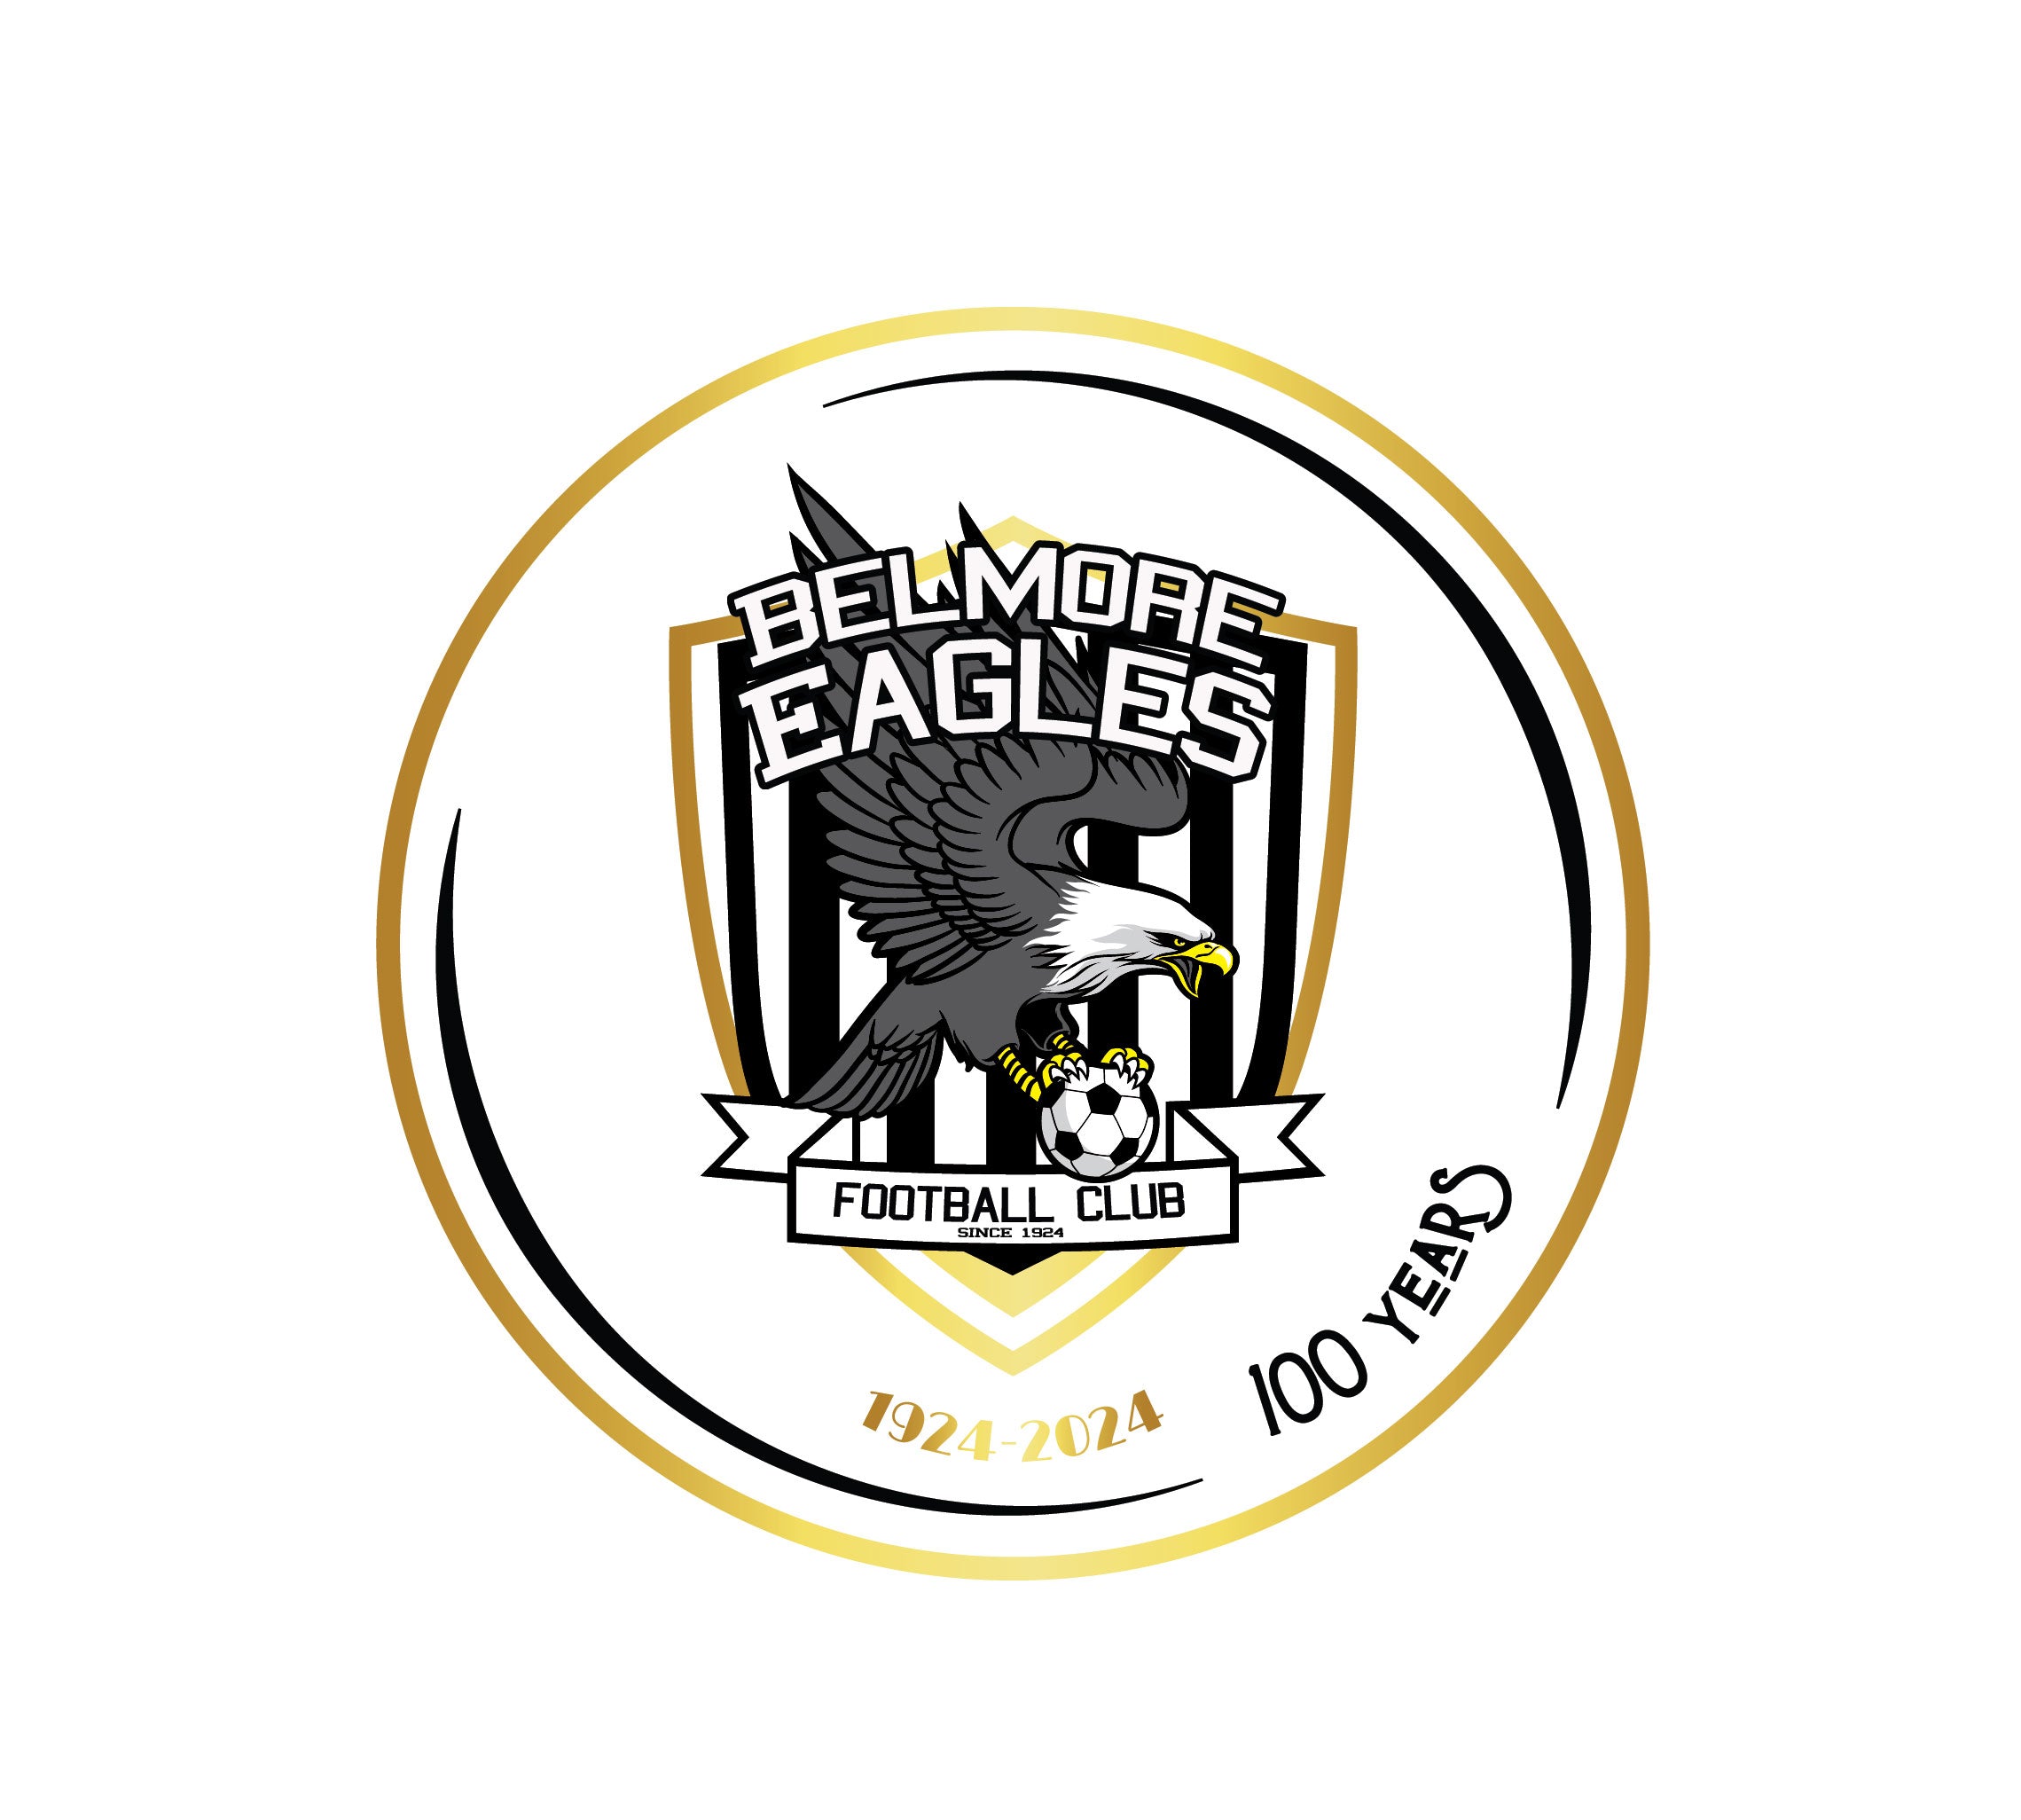 Belmore Eagles 100 Yr logo